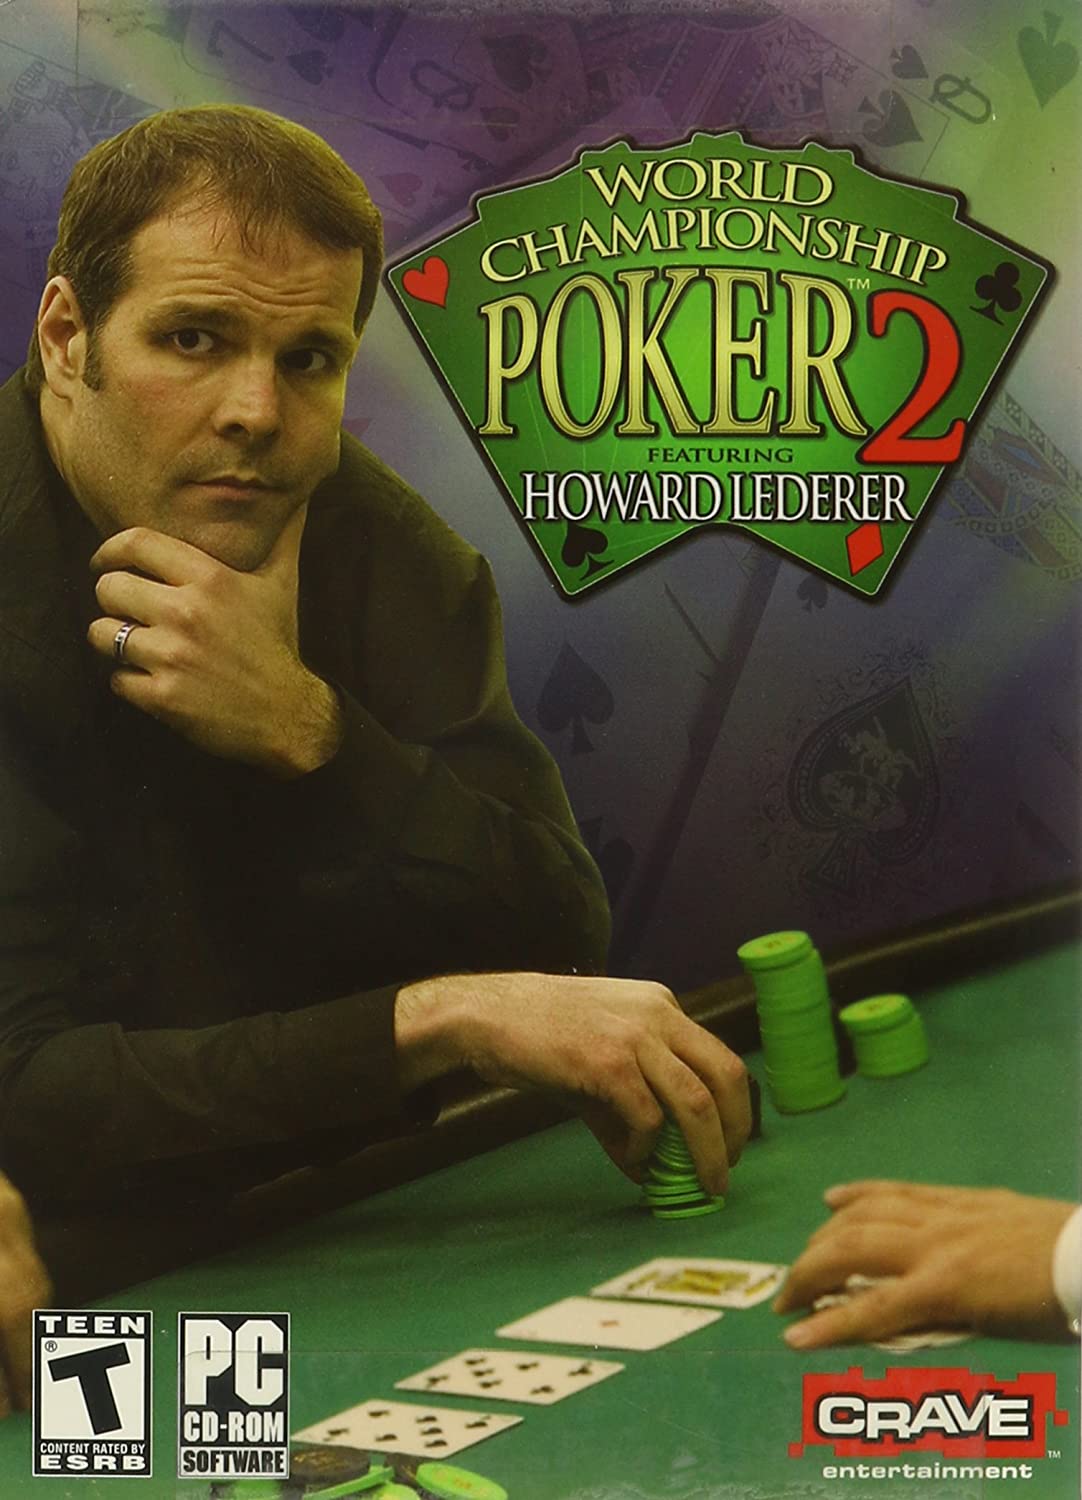 World Championship Poker 2: Featuring Howard Lederer player count stats